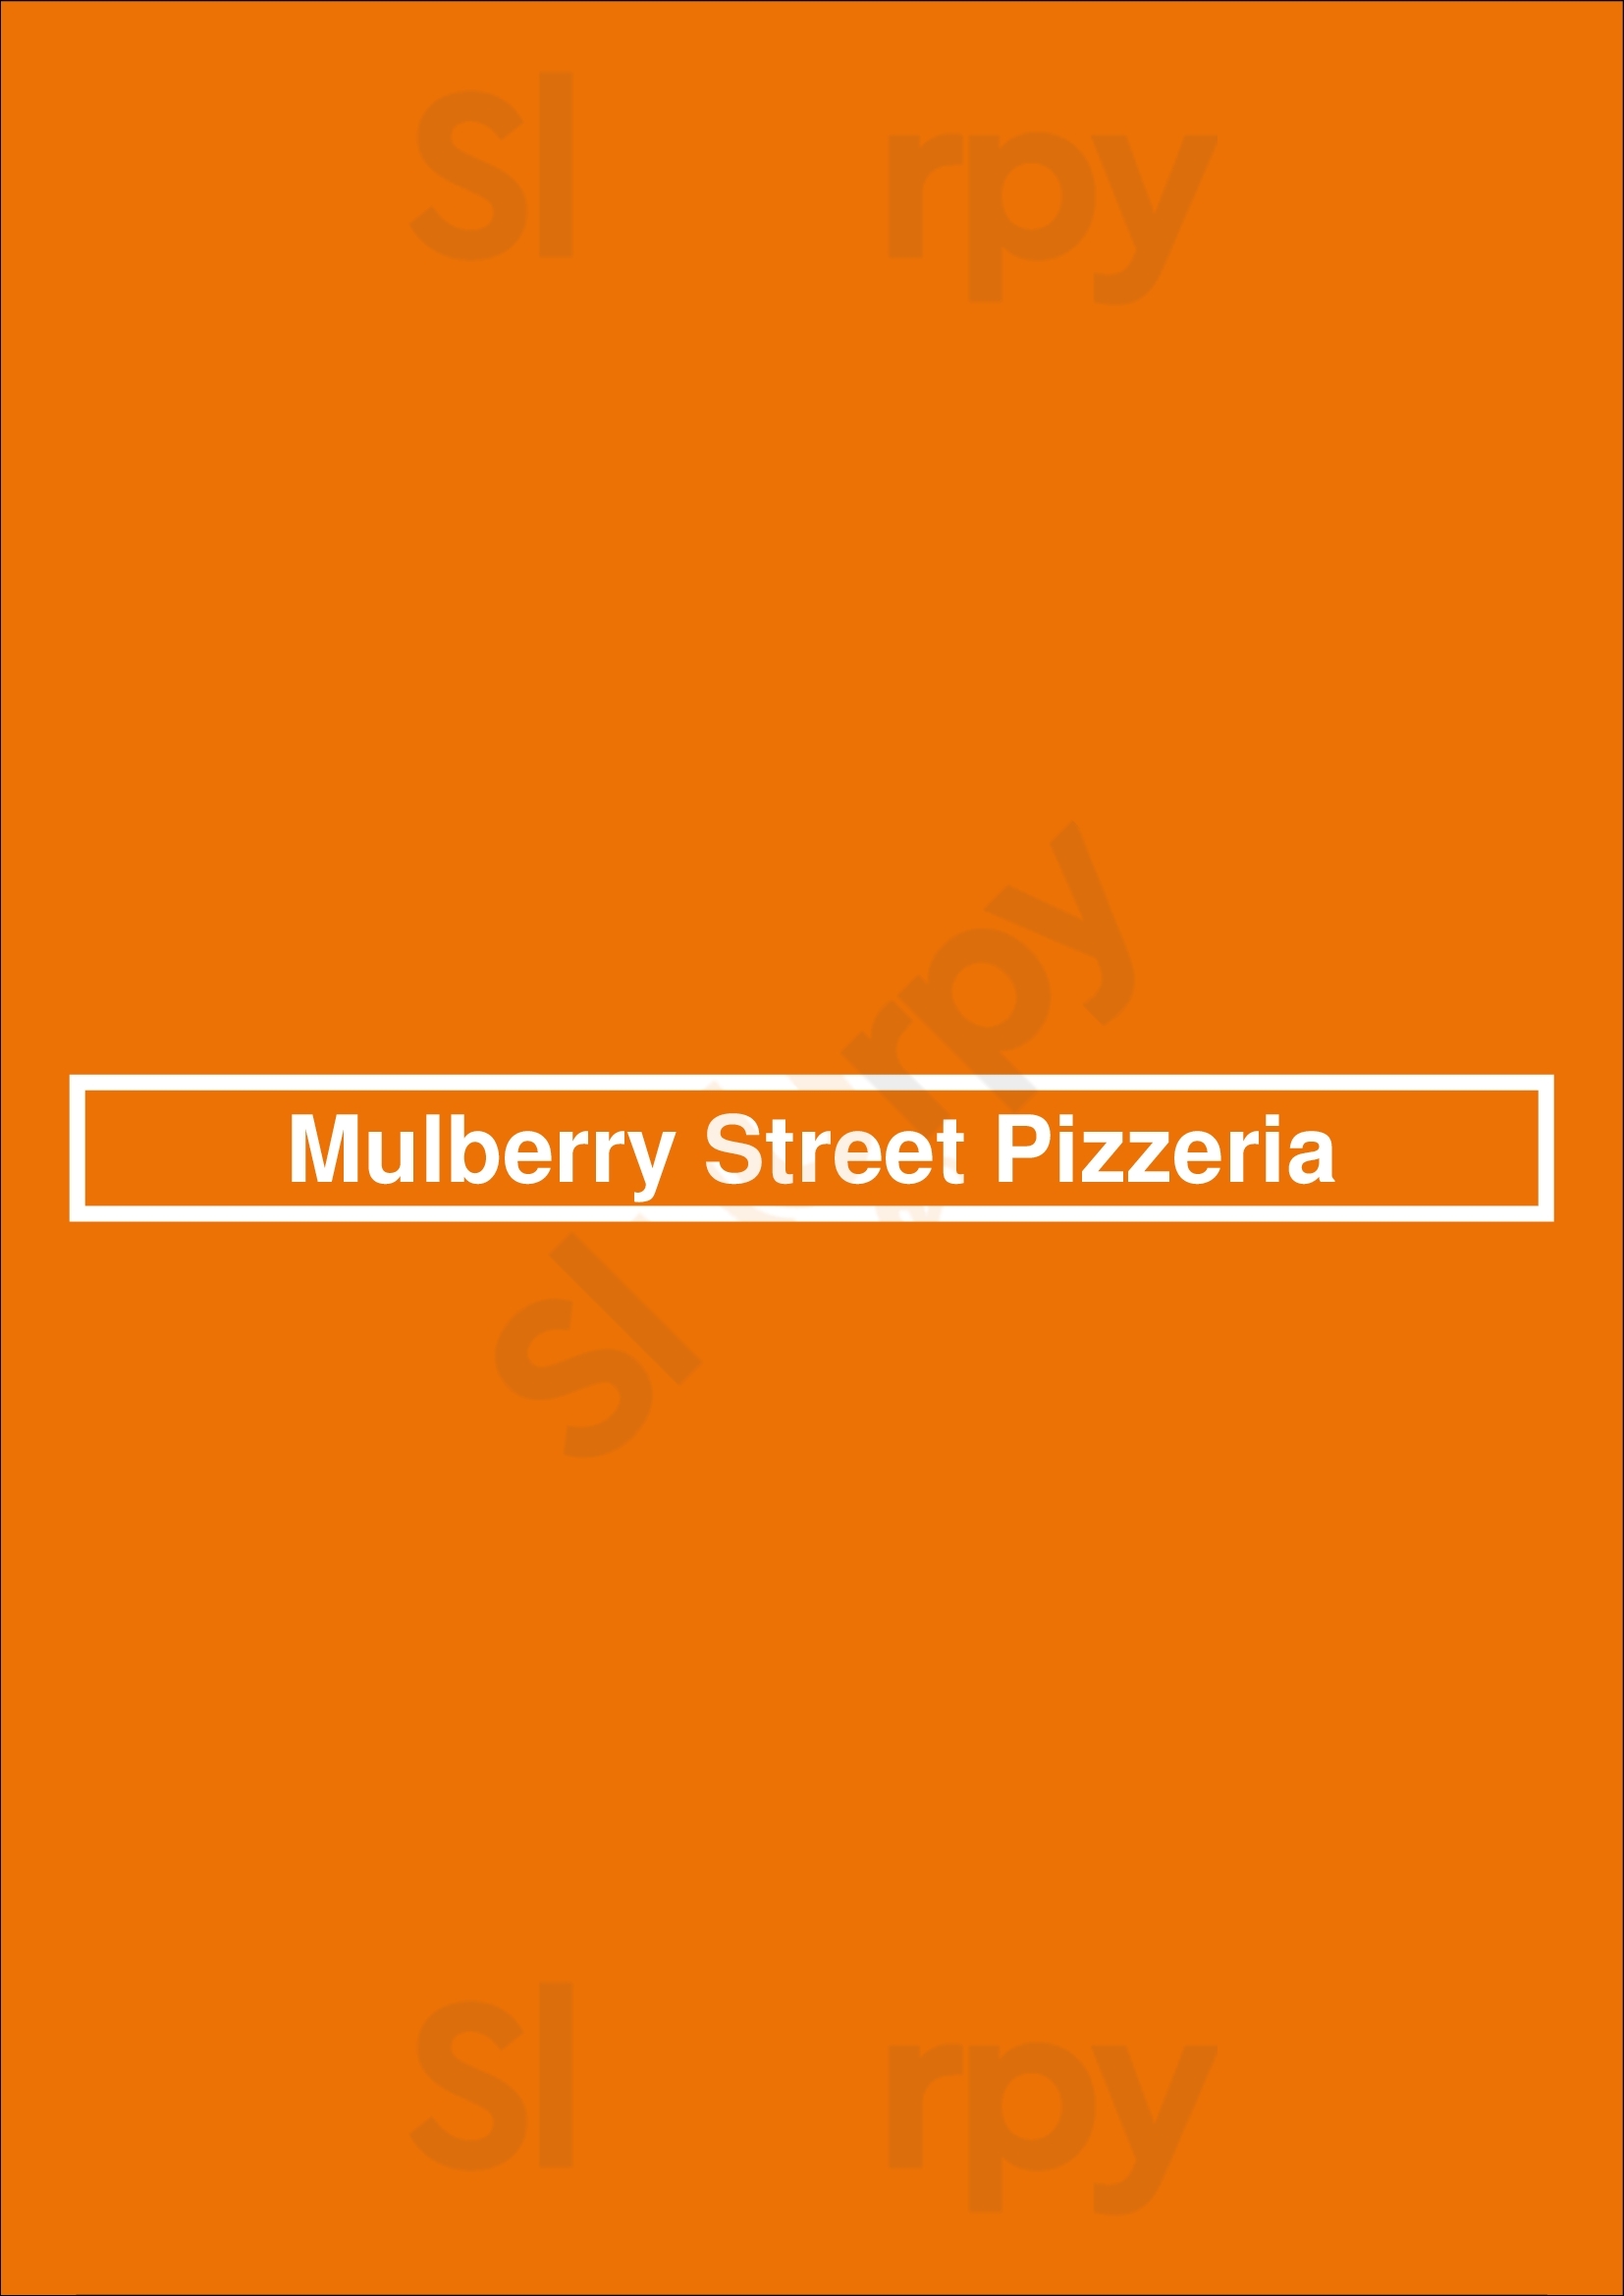 Mulberry Street New York Pizzeria London Menu - 1